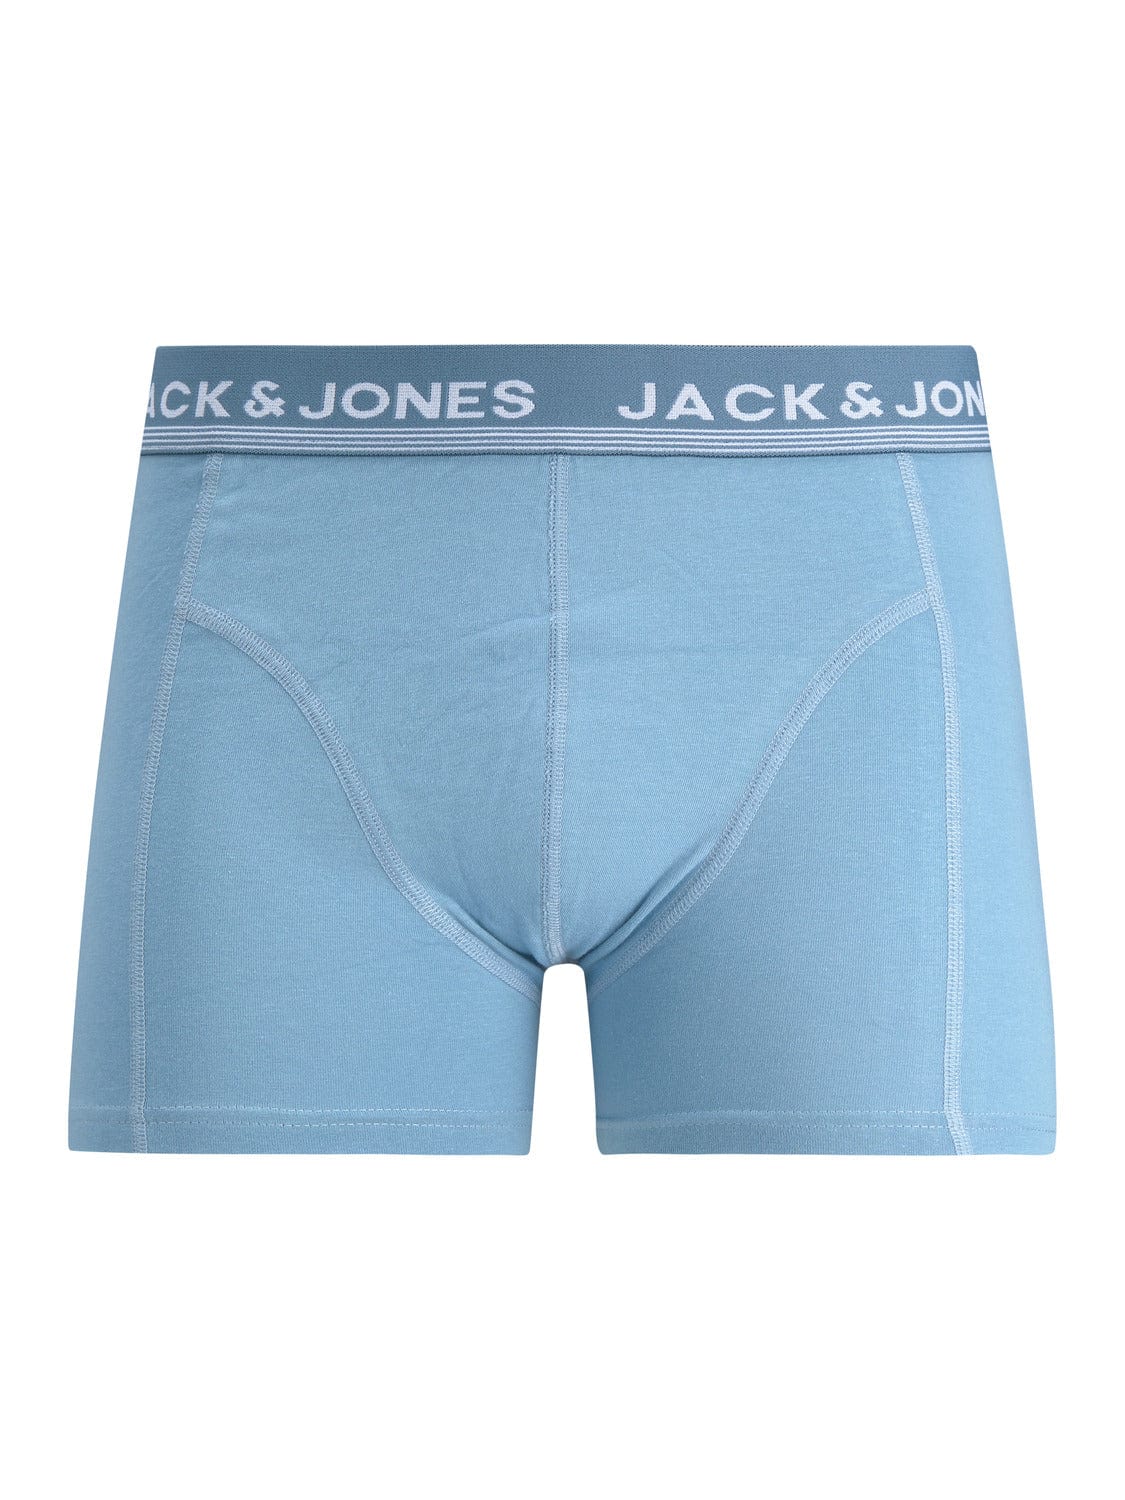 tipo boxer oack de calzoncillos: azul y negro modelo | JACK & Madrid